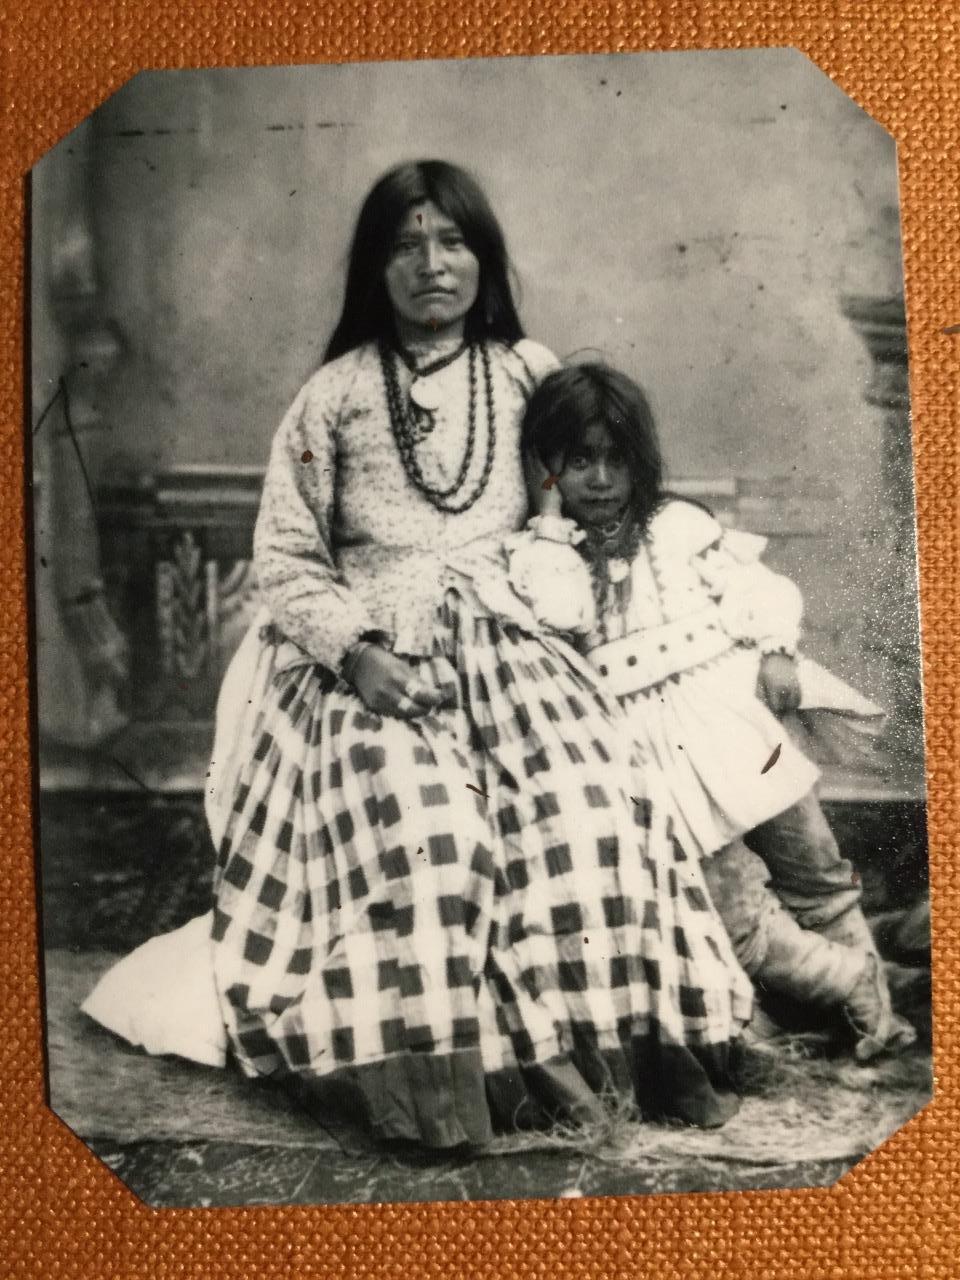 Ta-ayz-slath the wife of Geronimo Historical Museum Quality tintype C095RP